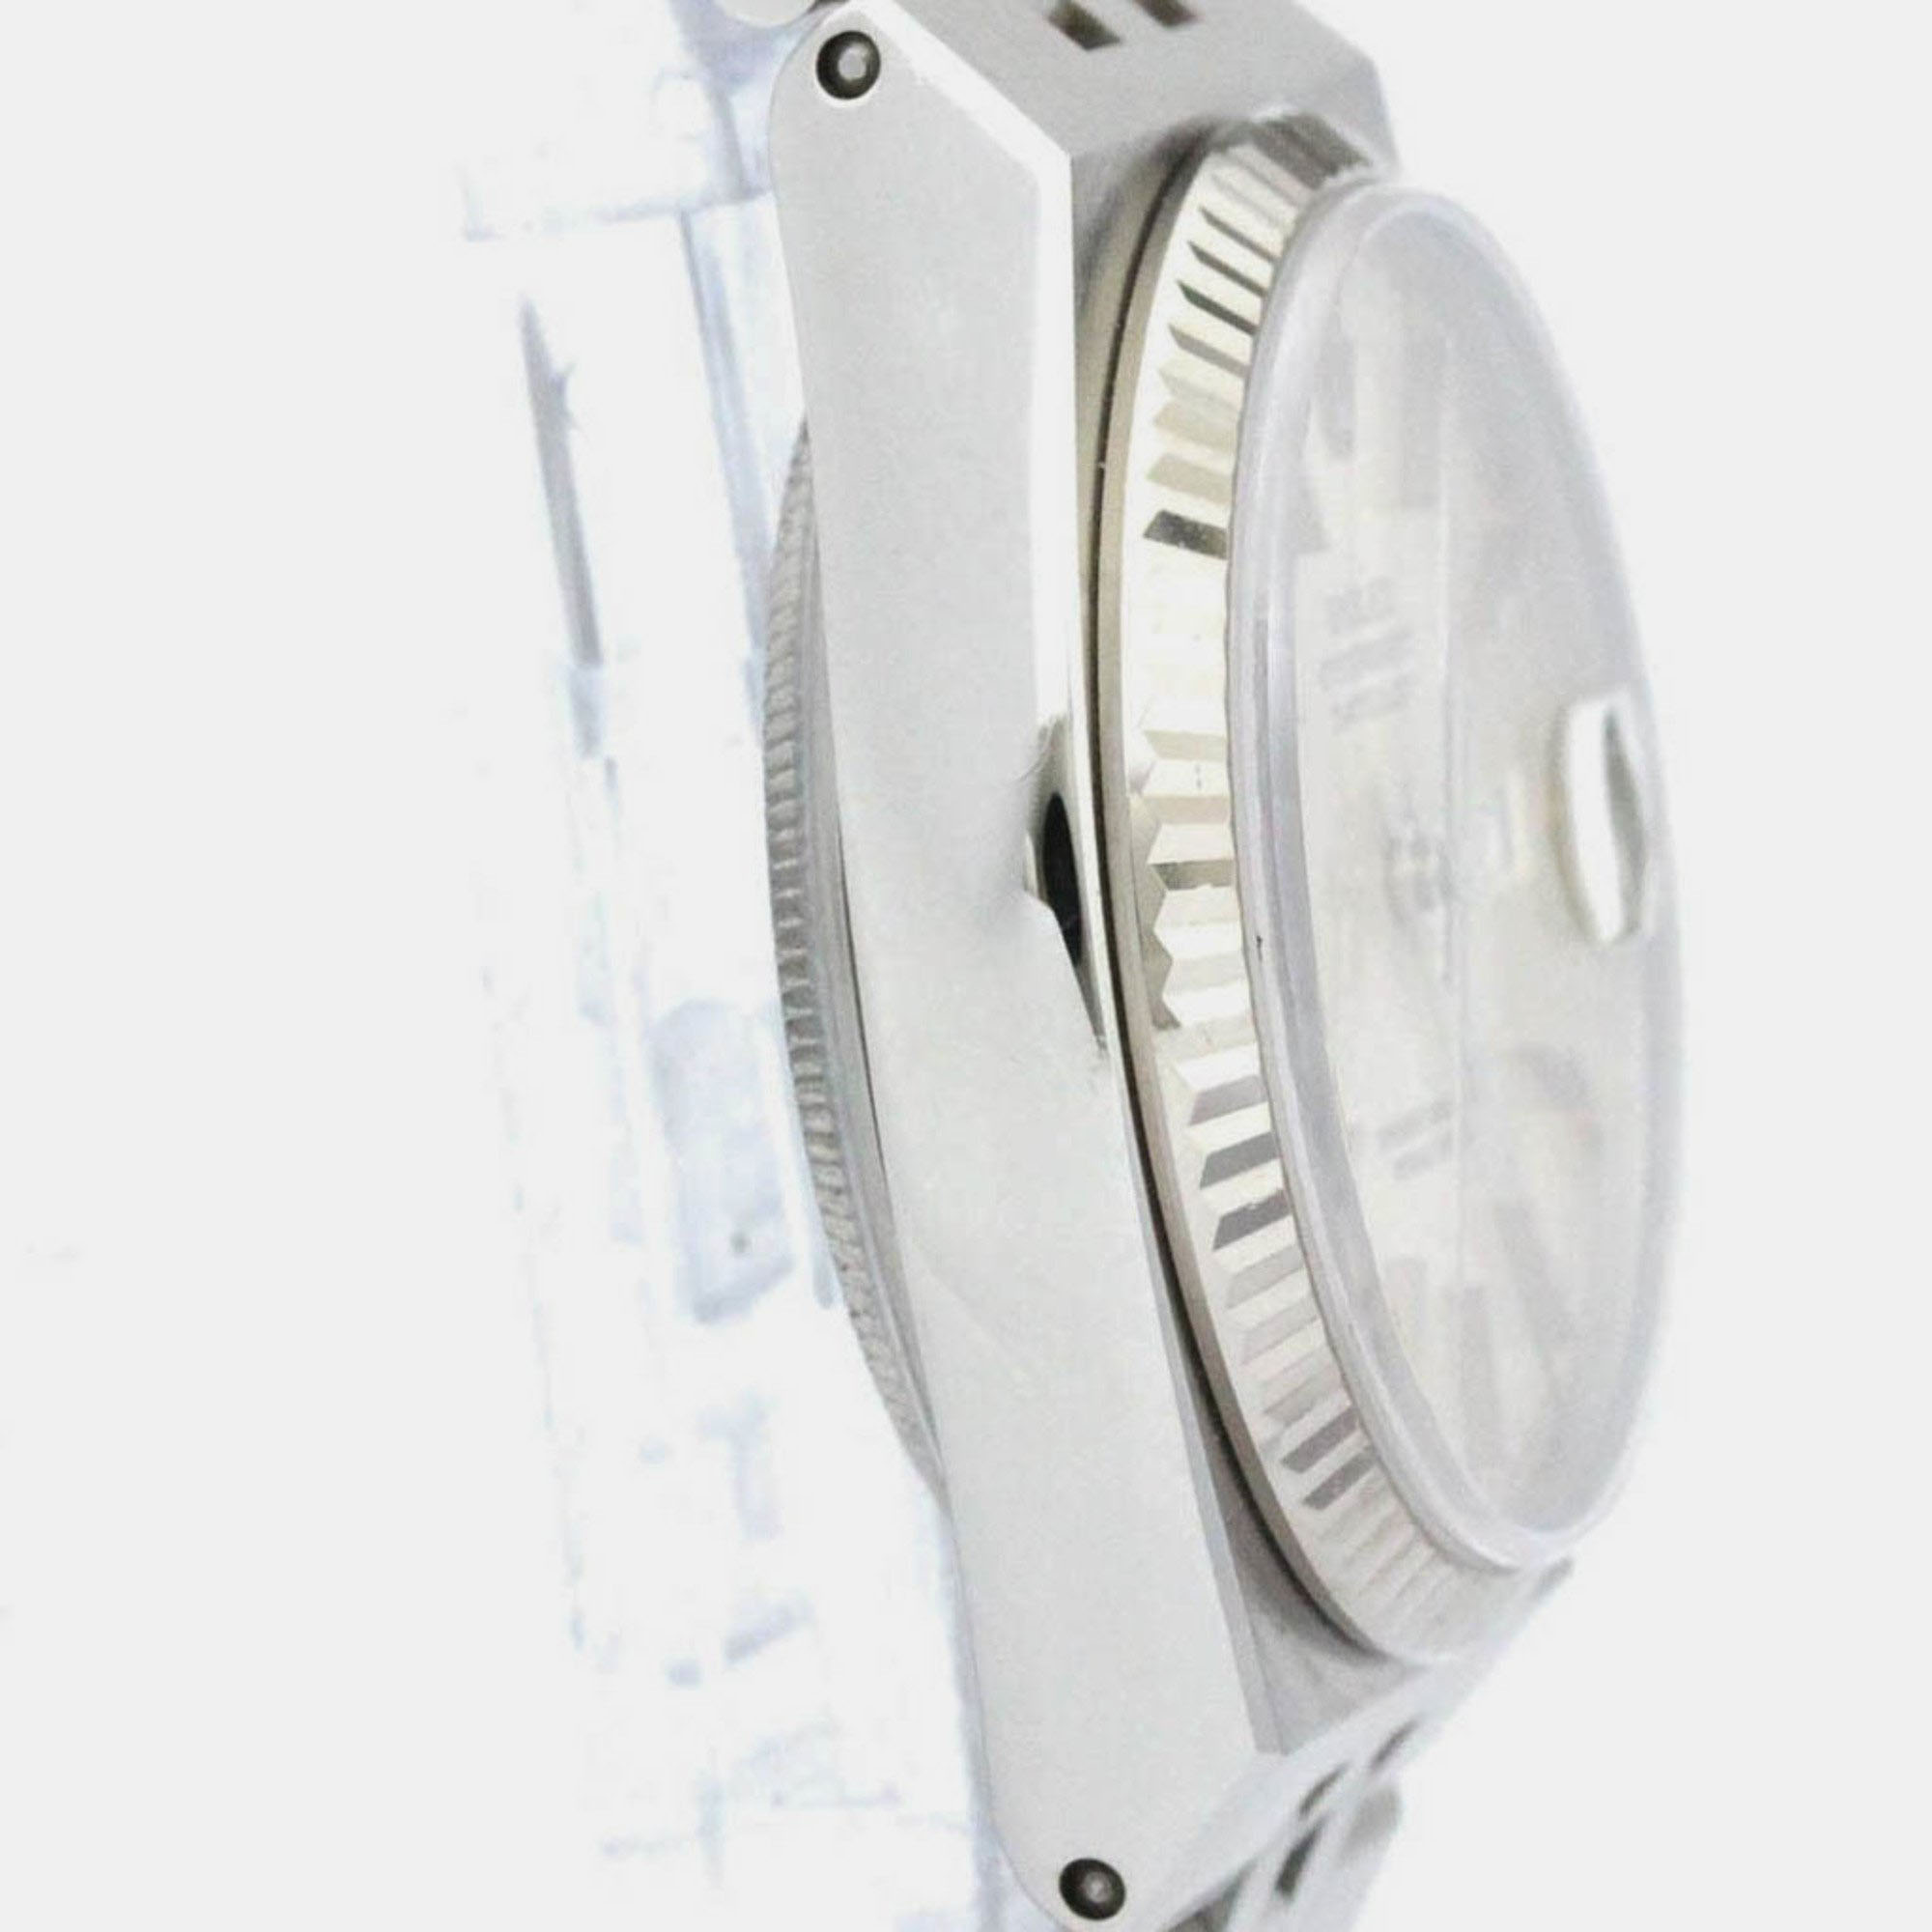 Rolex Silver 18k White Gold And Stainless Steel Datejust 17014 Quartz Men's Wristwatch 36 Mm